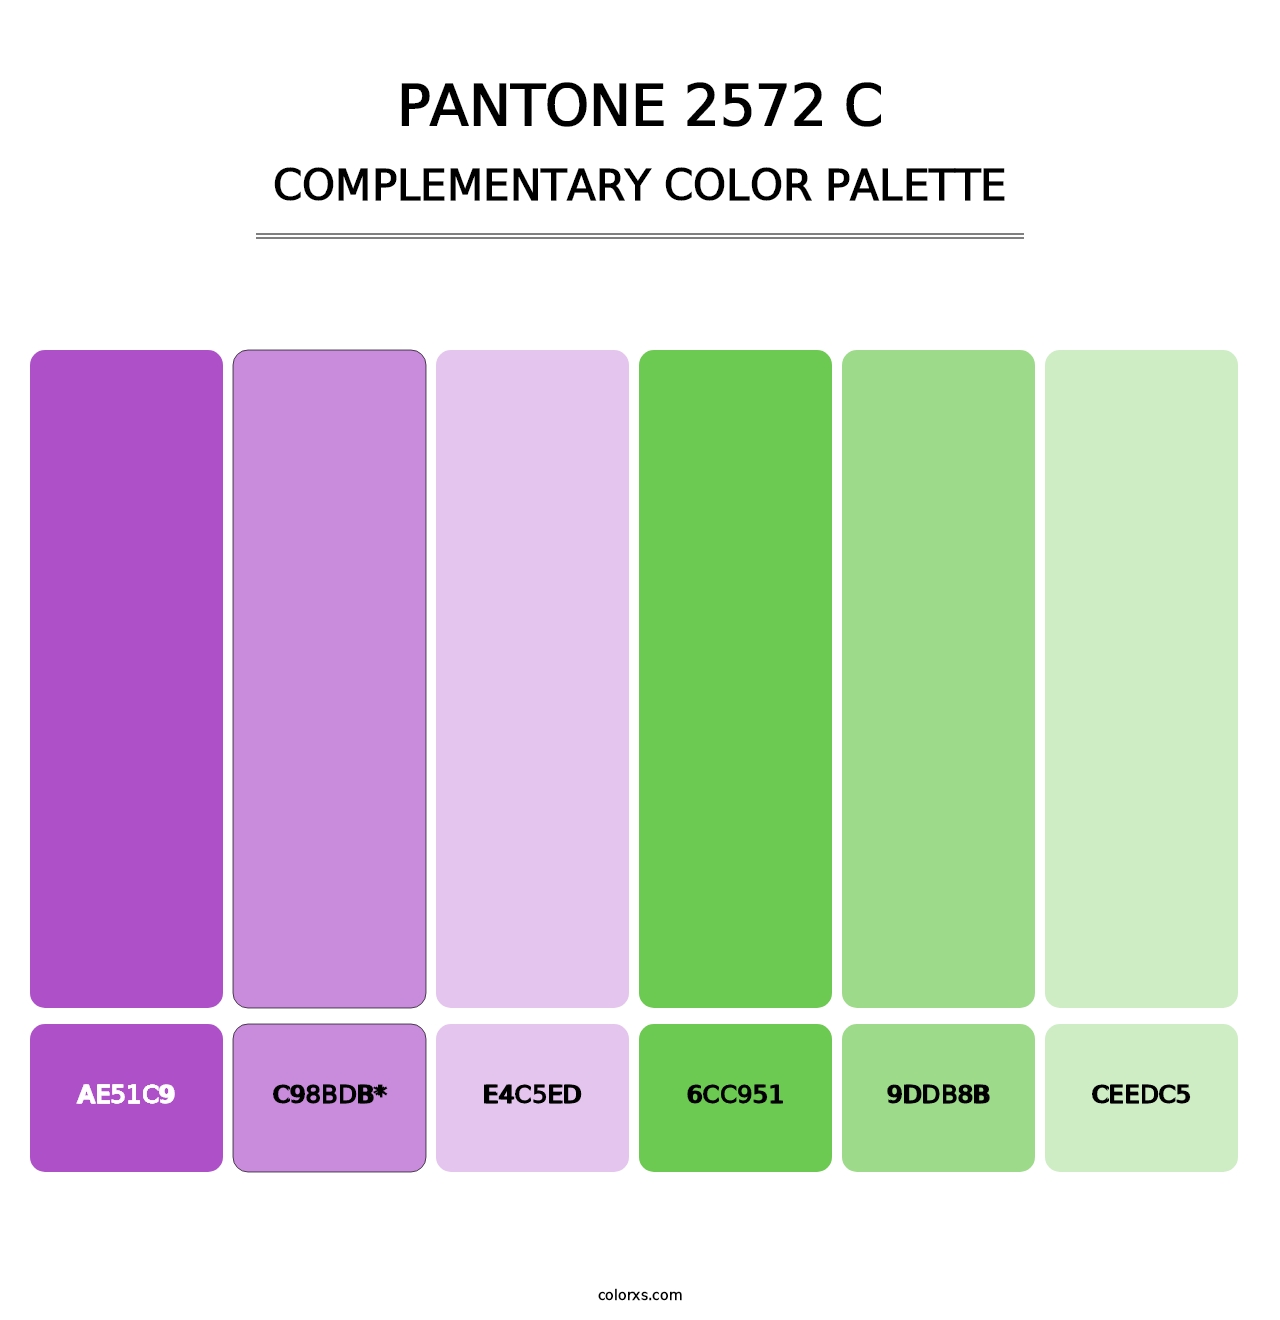 PANTONE 2572 C - Complementary Color Palette